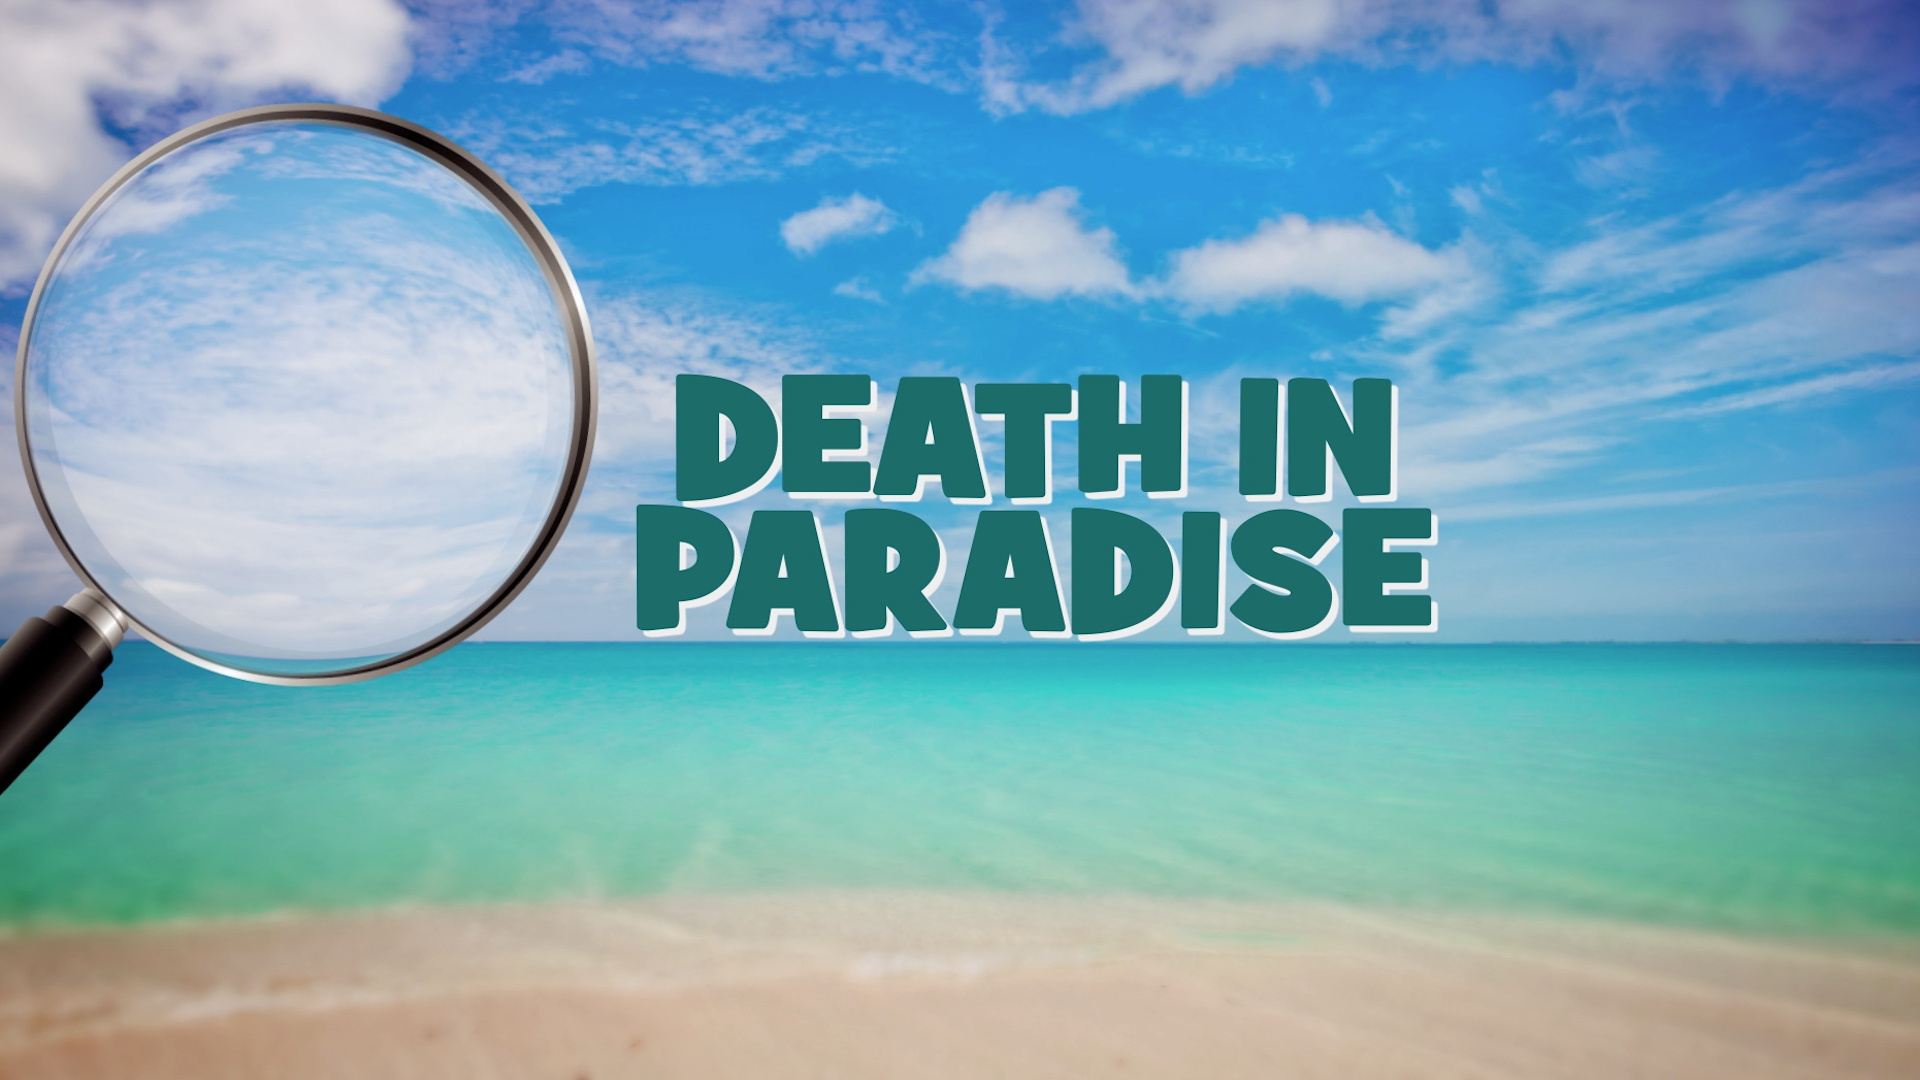 Death in Paradise, Twin cities, PBS series, Crime drama, 1920x1080 Full HD Desktop